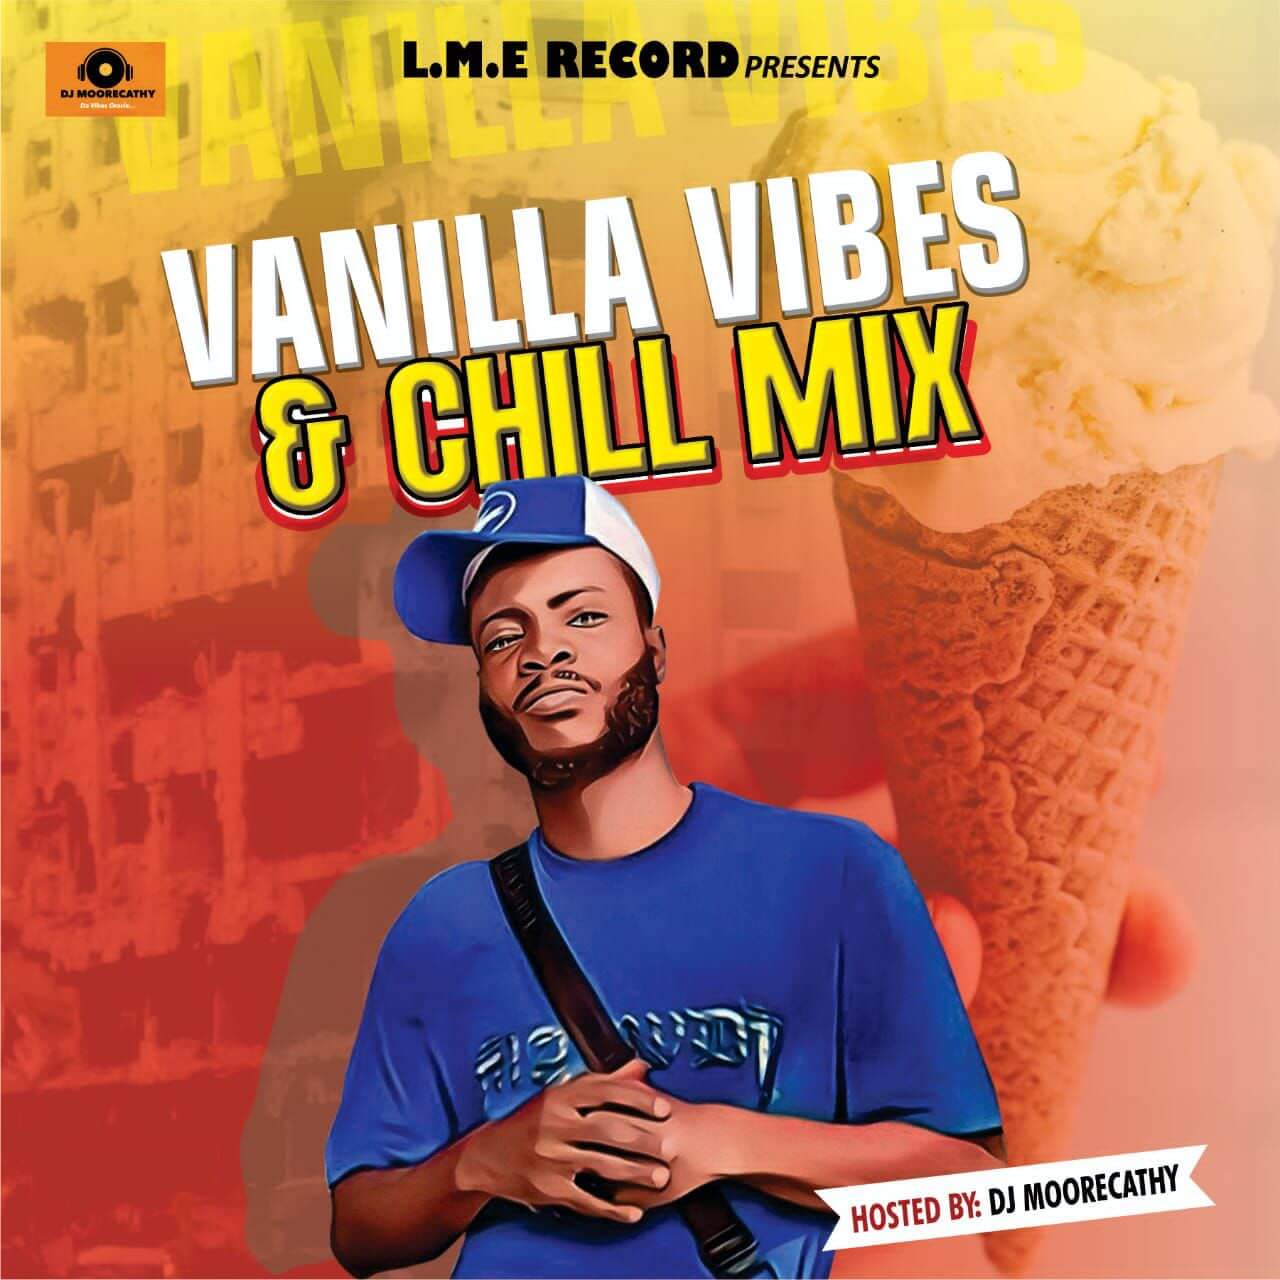 Dj moorecathy - Vanilla Vibes & Chill Mix